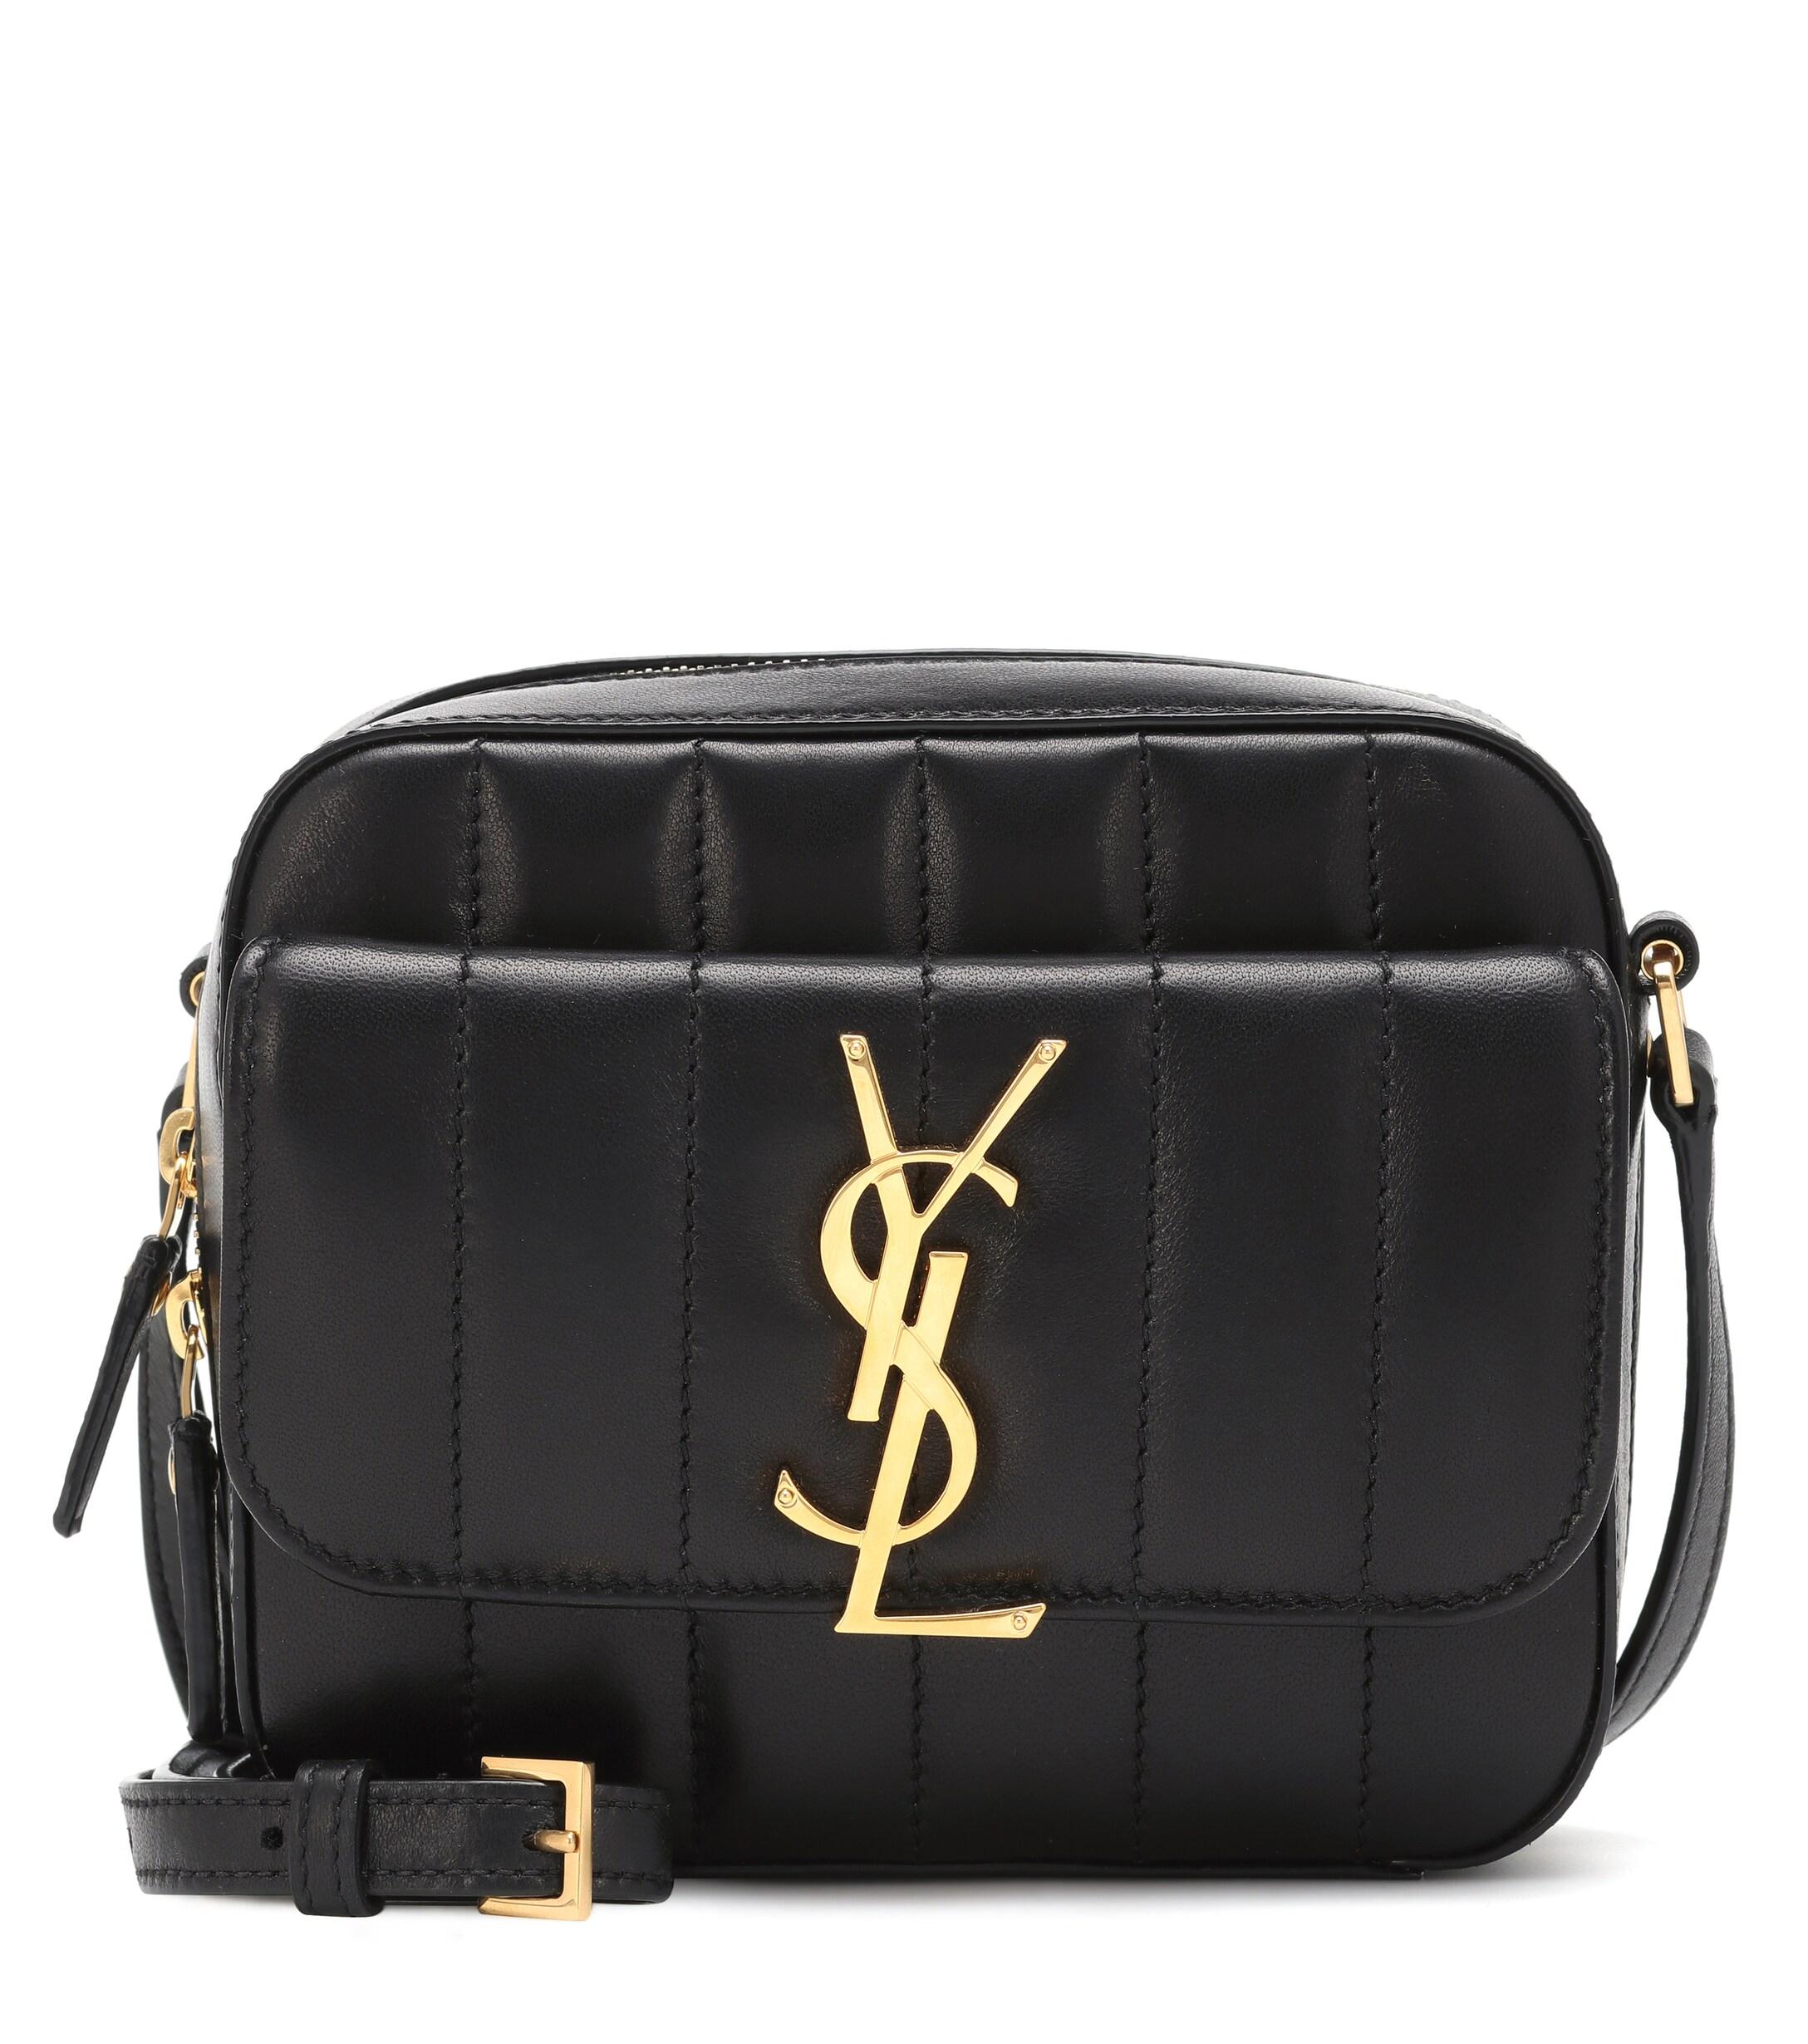 Saint Laurent Mini Vicky Leather Shoulder Bag in Nero (Black) - Lyst